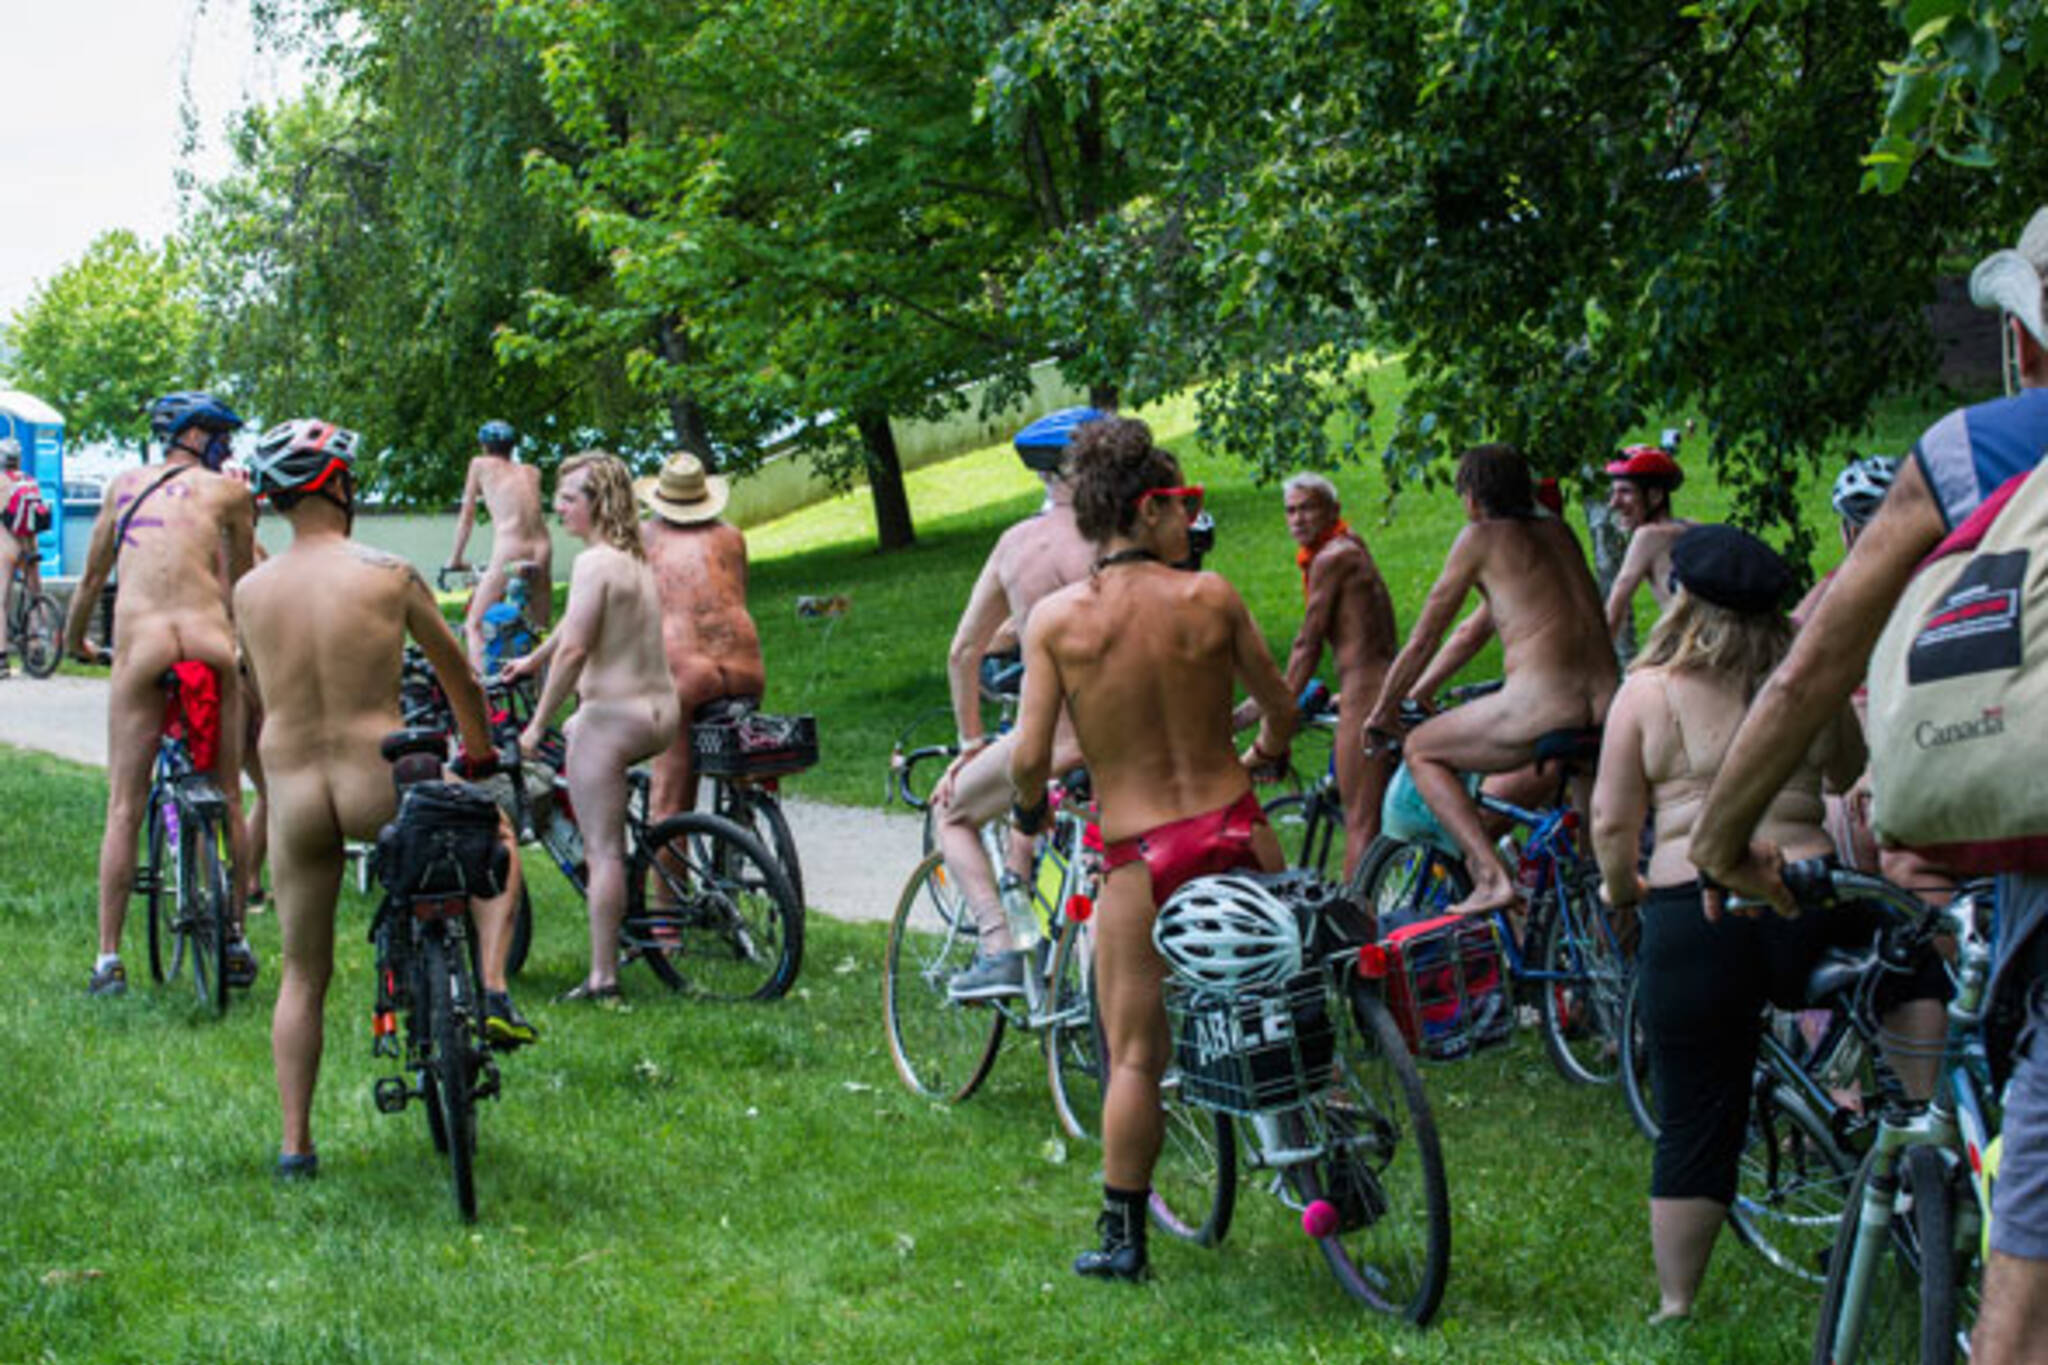 World Naked Bike Ride day